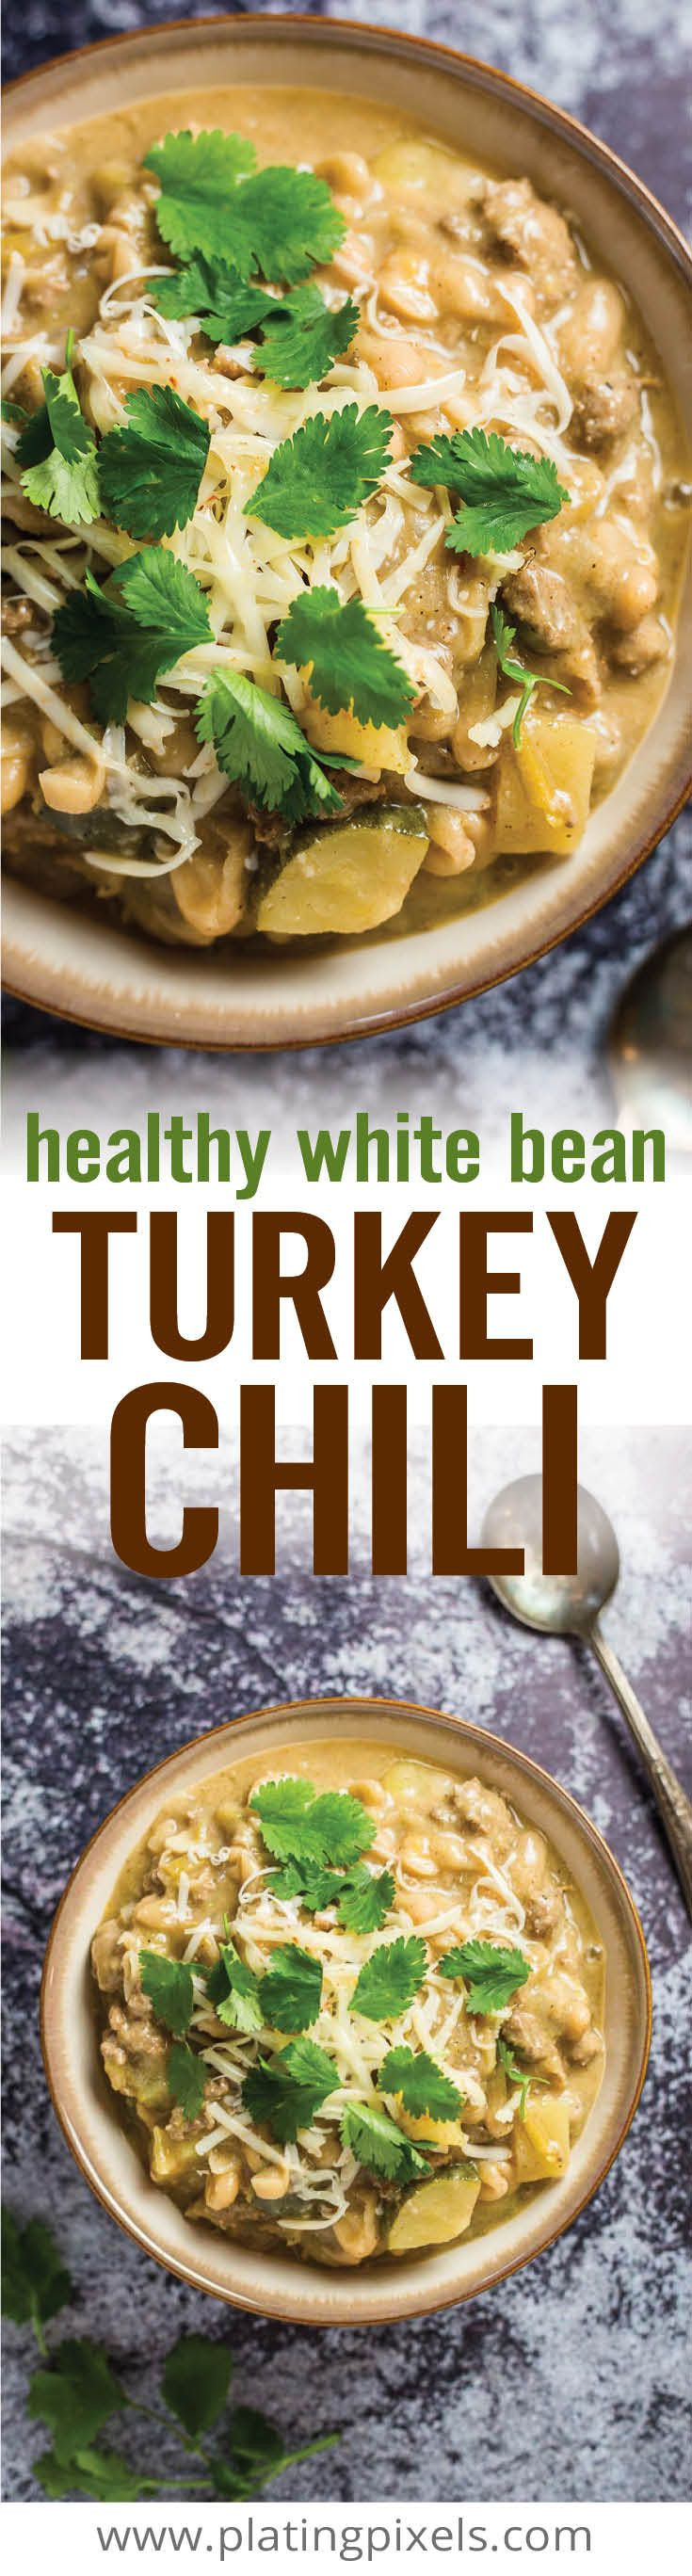 Healthy White Turkey Chili
 25 best ideas about White bean chili on Pinterest